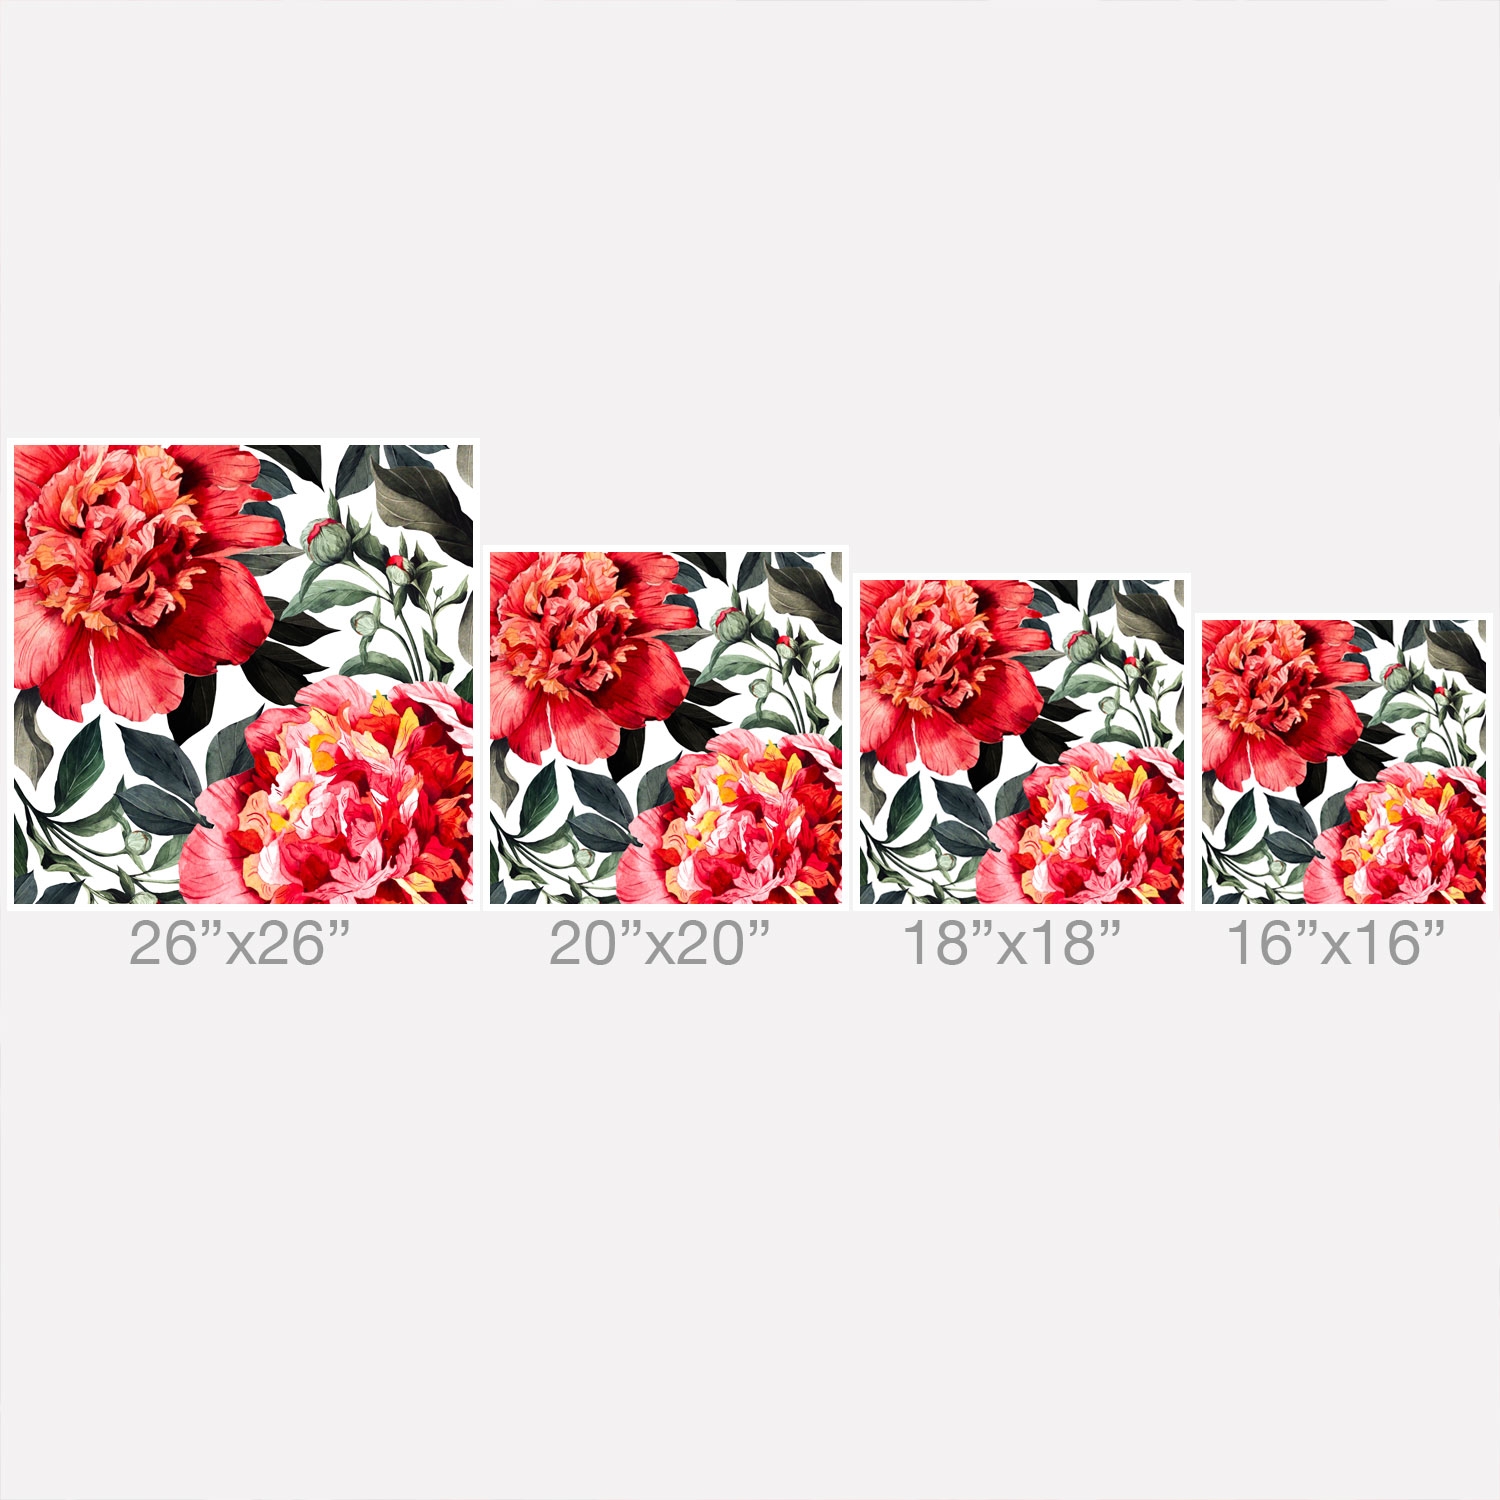 Big Red Watercolor Flowers by Marta Barragan Camarasa - Outdoor Throw Pillow 16" x 16" - Image 3